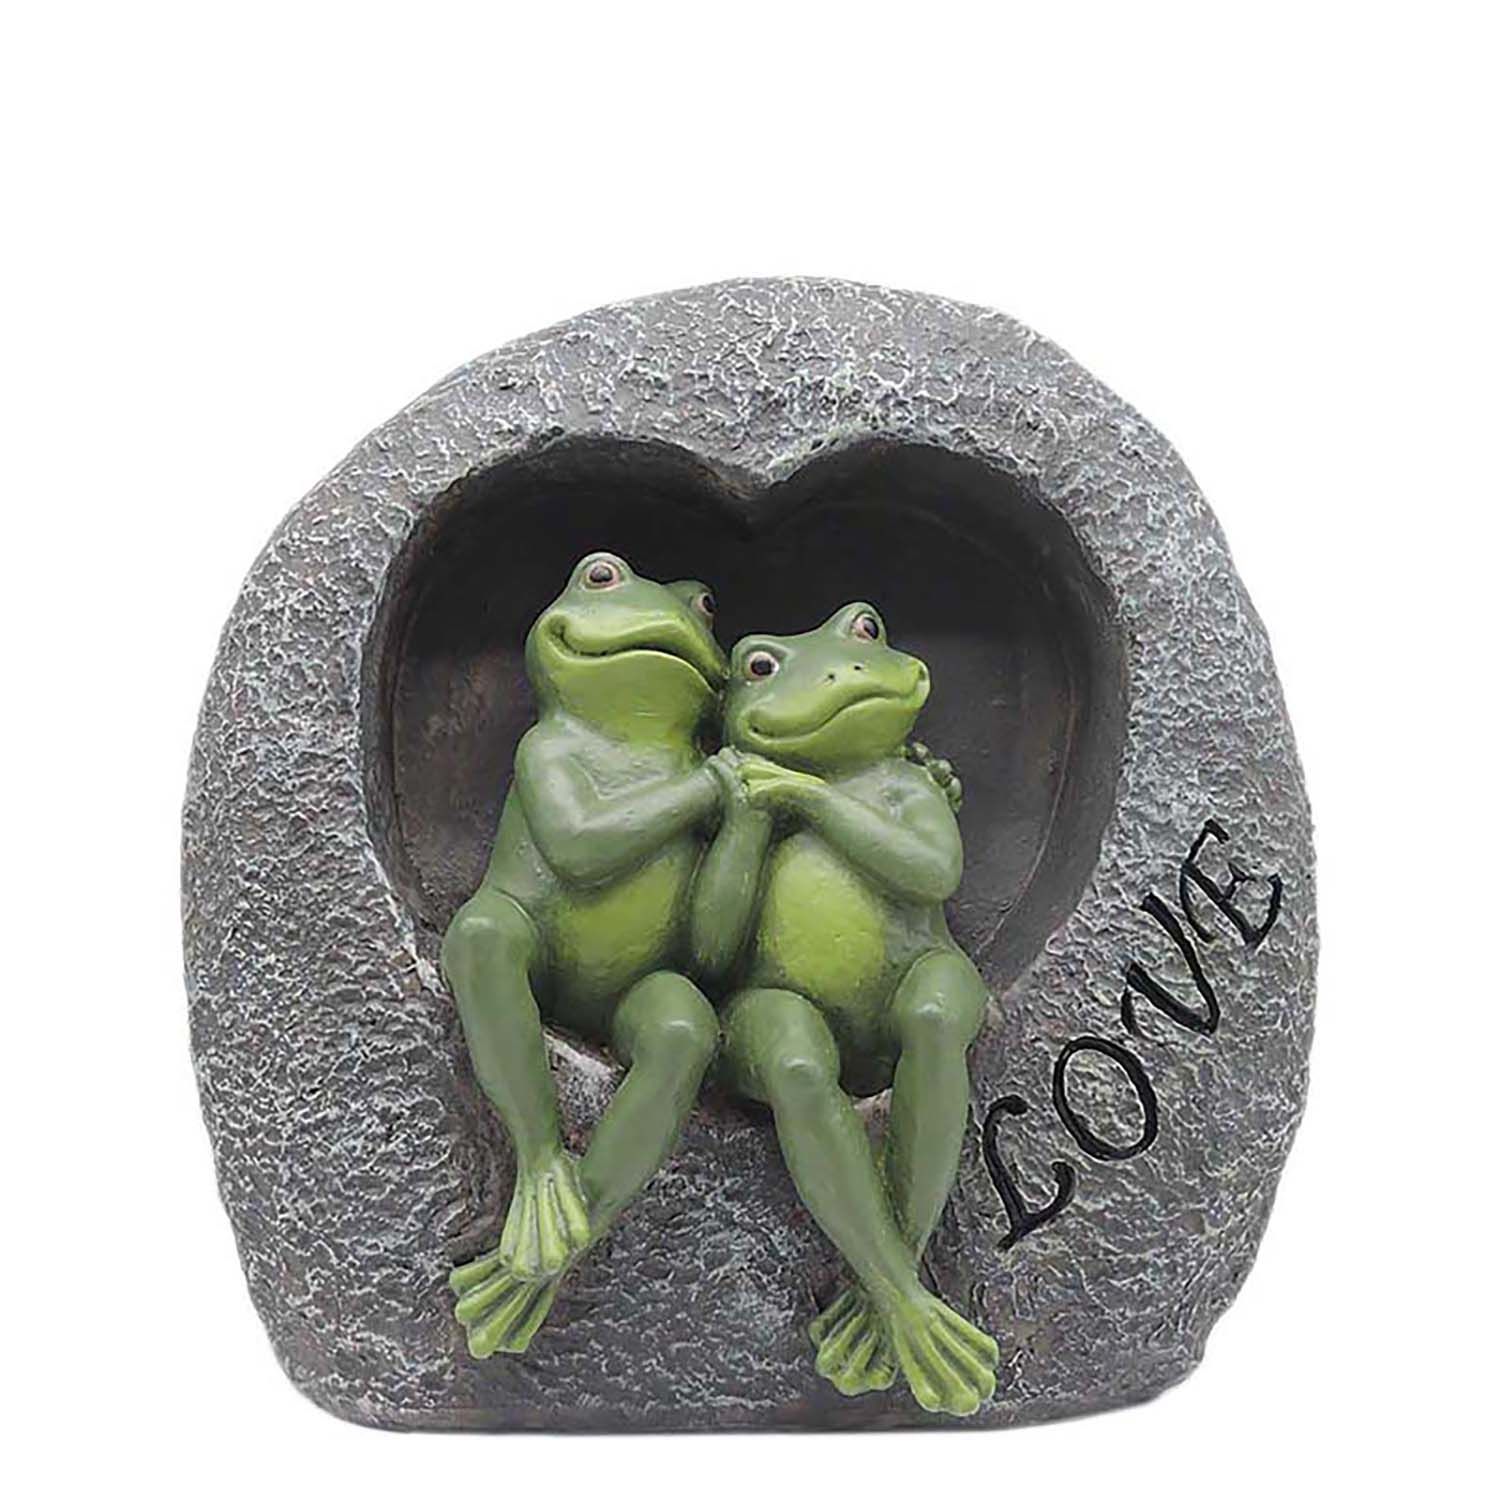 Garden Decorations Statues Love  Couple Frogs Resin Indoor Figurine for Yard Home Garden PH15813 